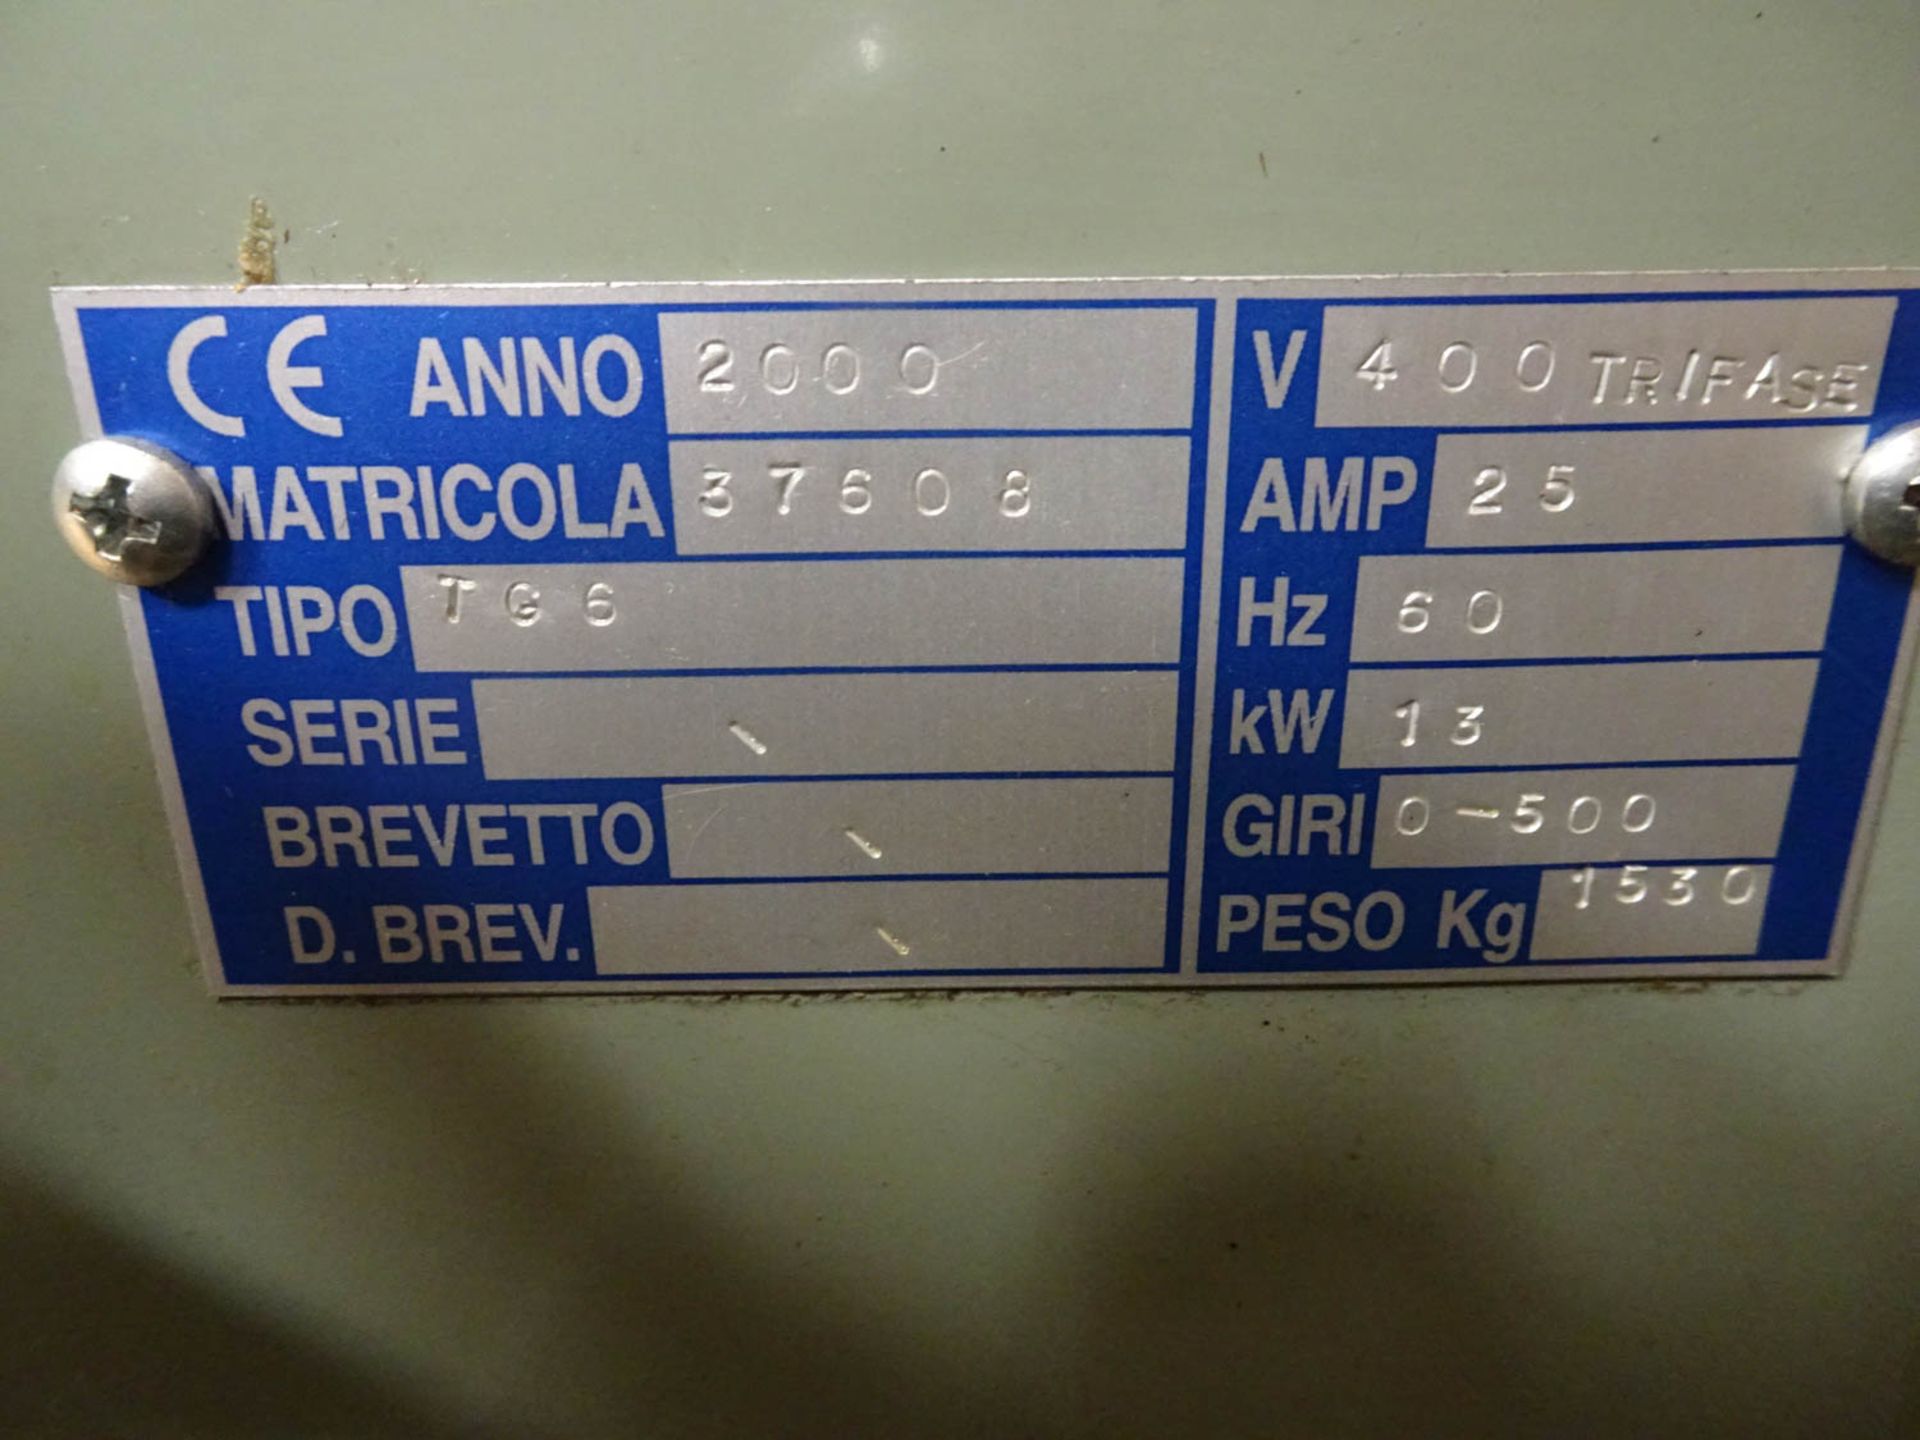 CIEMMEO MDL. TG5 (ITALY) (CE) ICE DIAMOND CUTTING MACHINE, CNC, AUTOMATIC, ELECTRONIC, 400 VOLTS, - Image 9 of 9